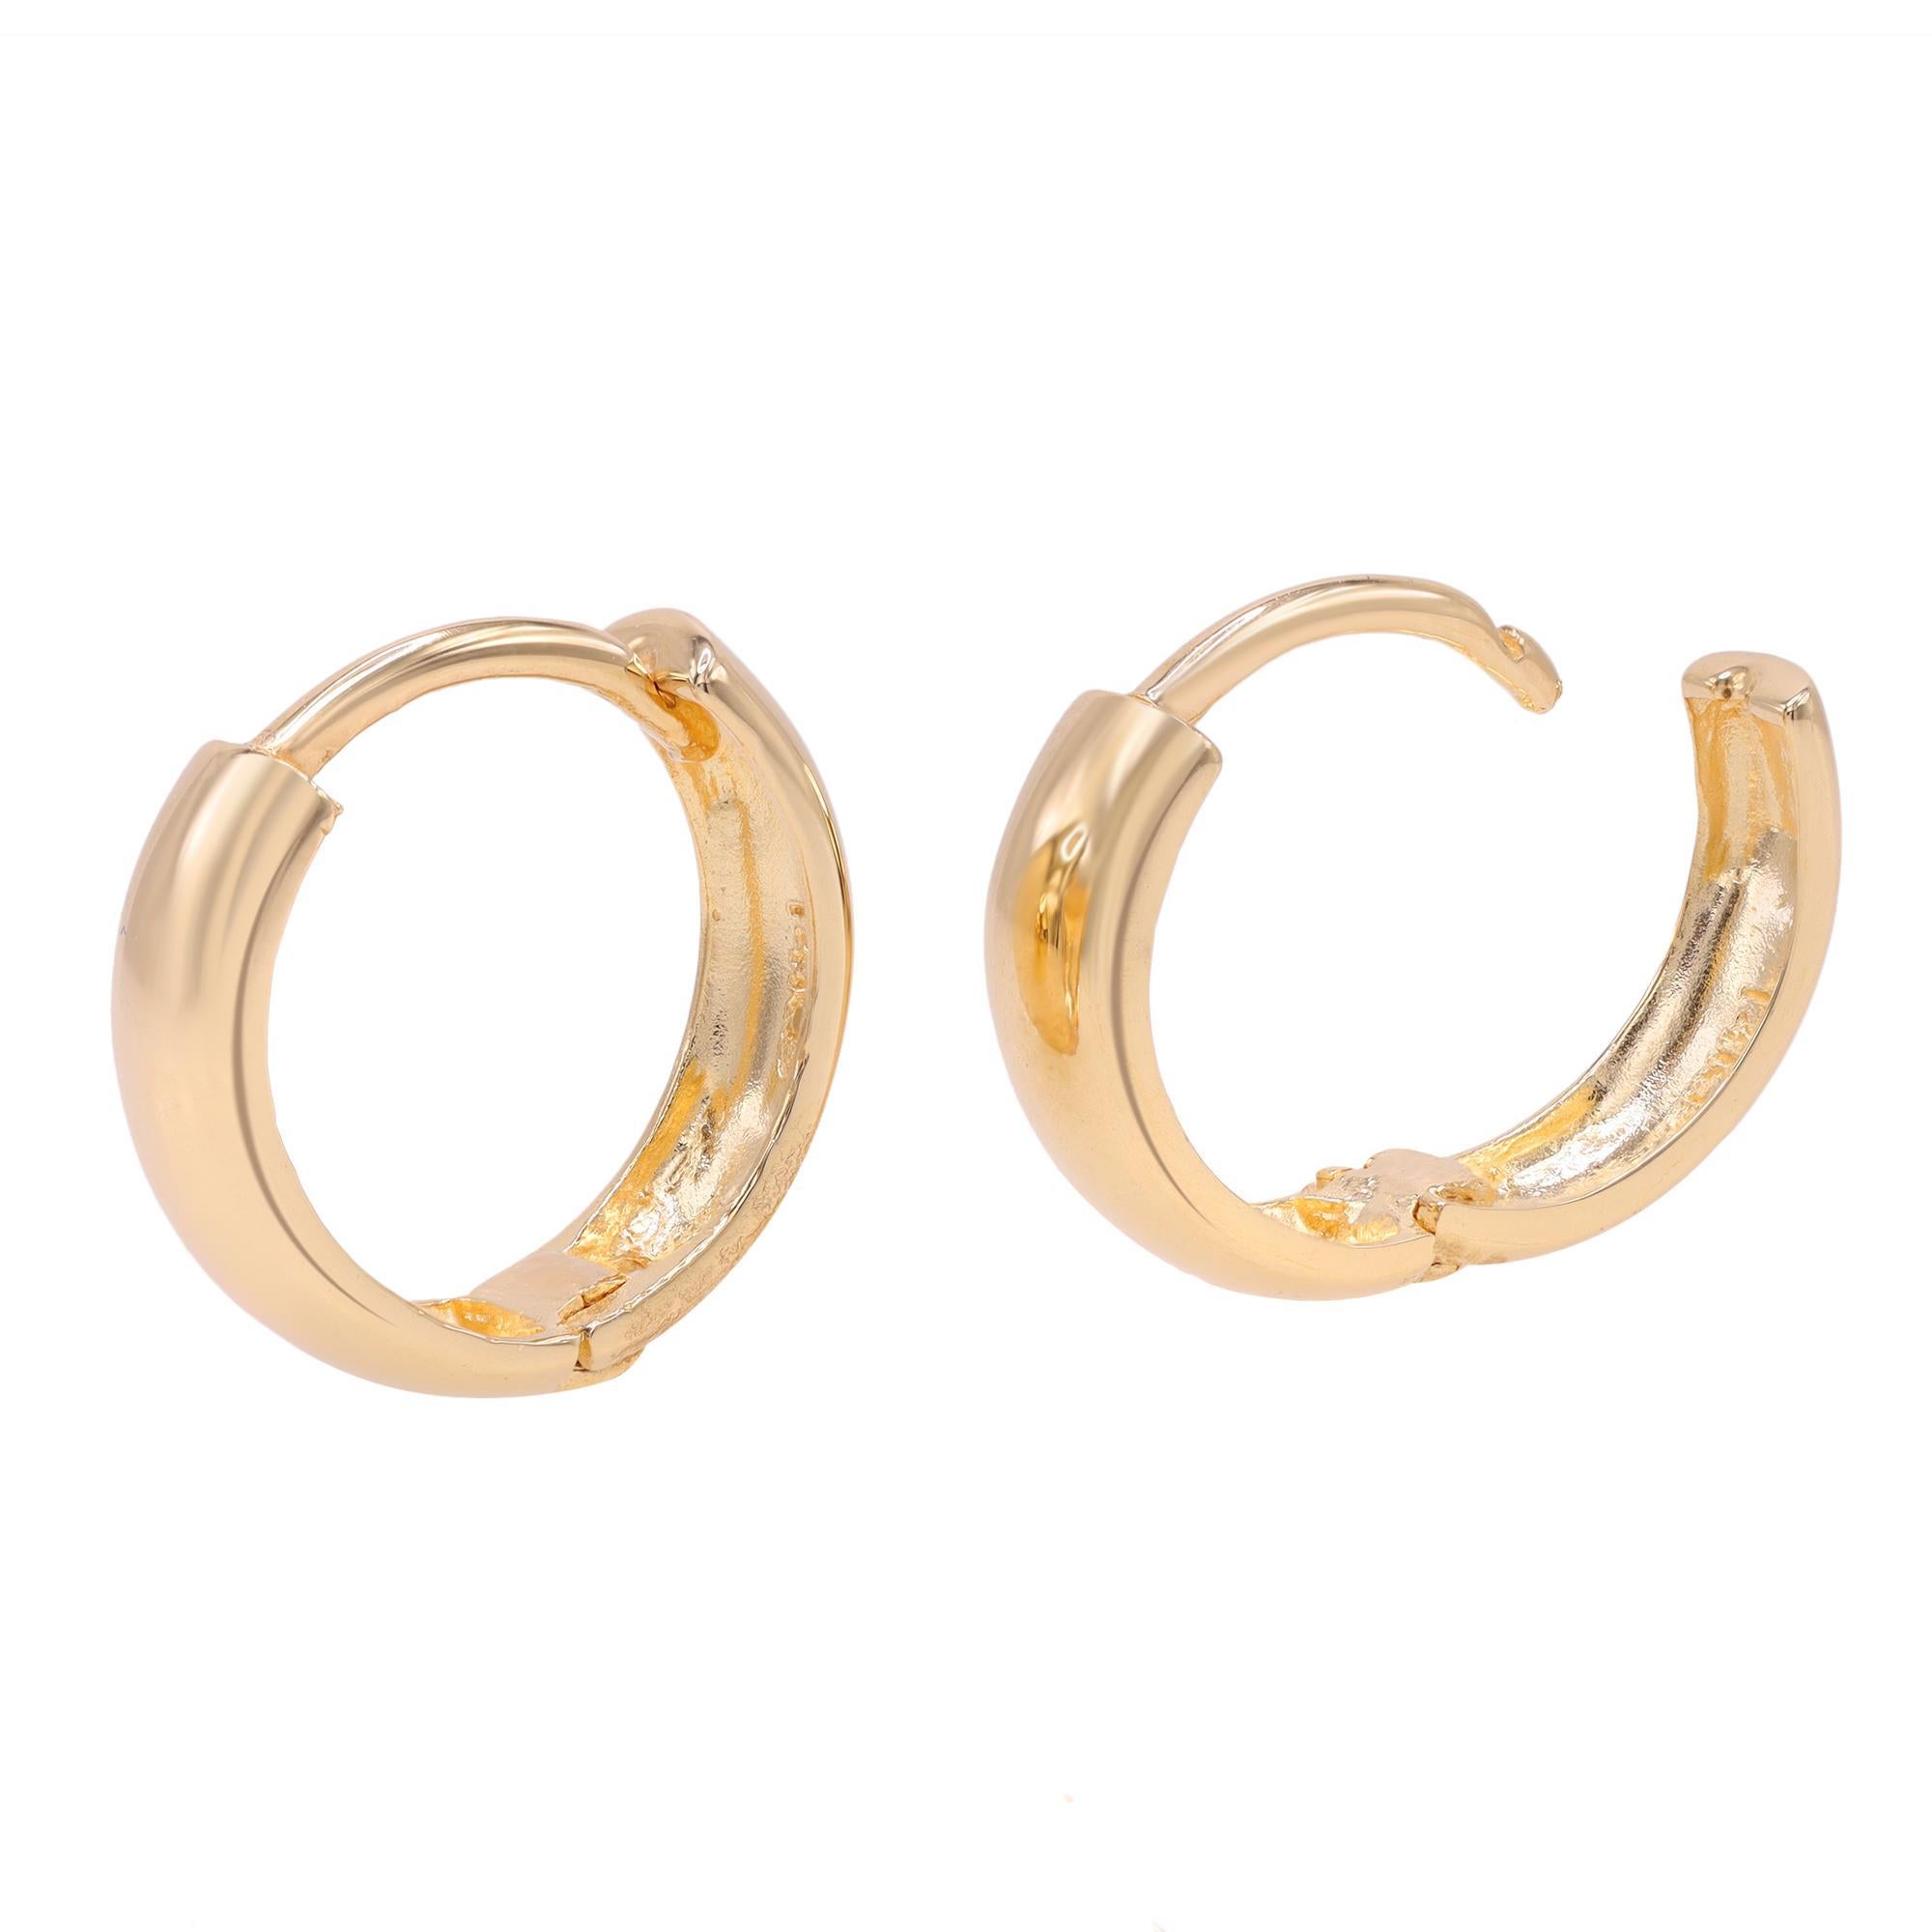 12mm gold huggie earrings